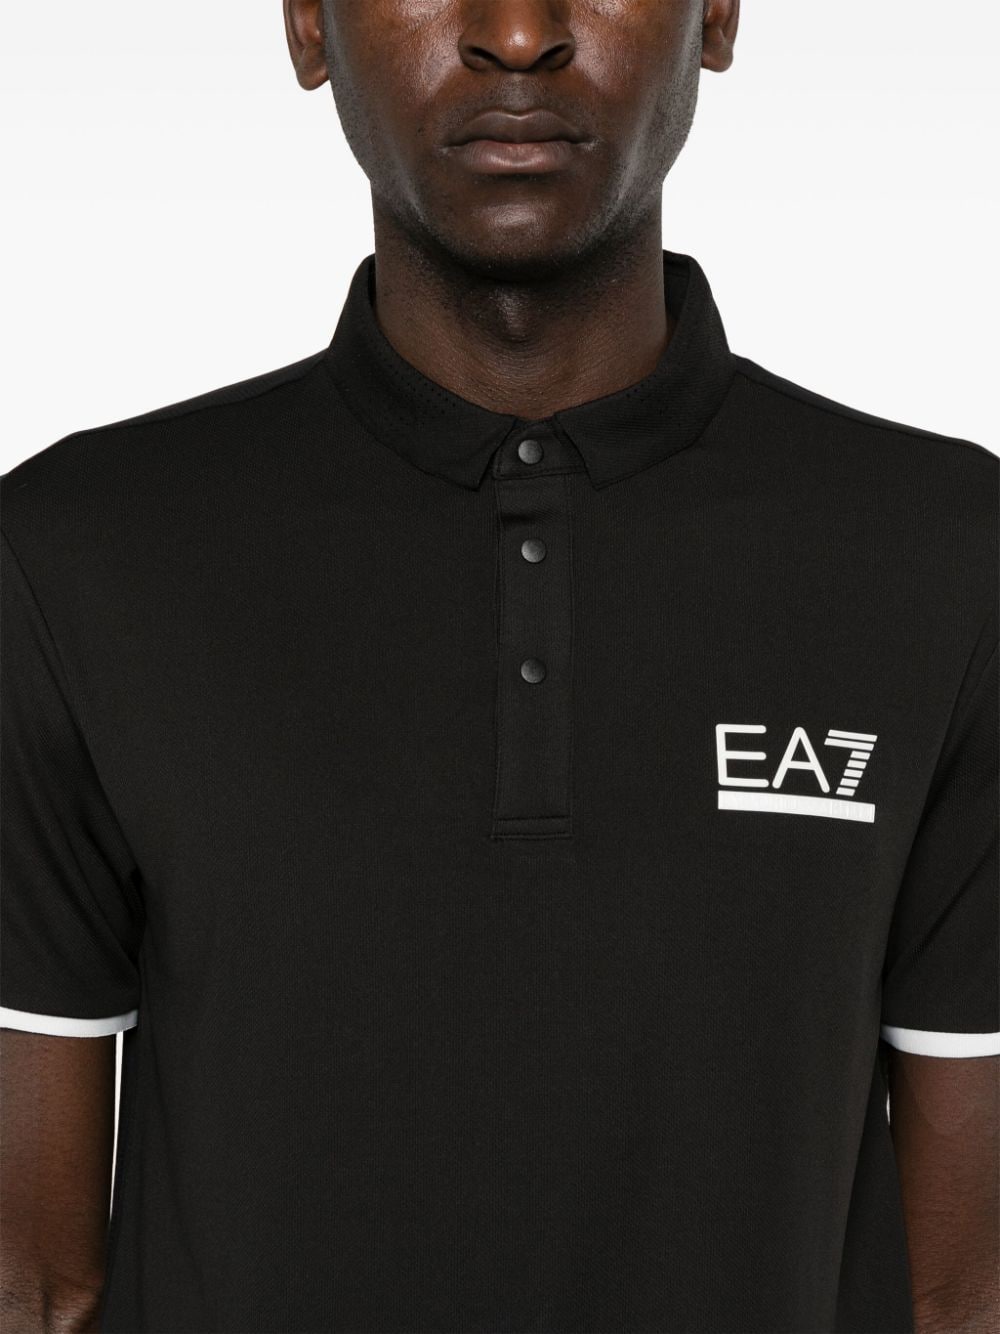 Ea7 T Shirts And Polos Black